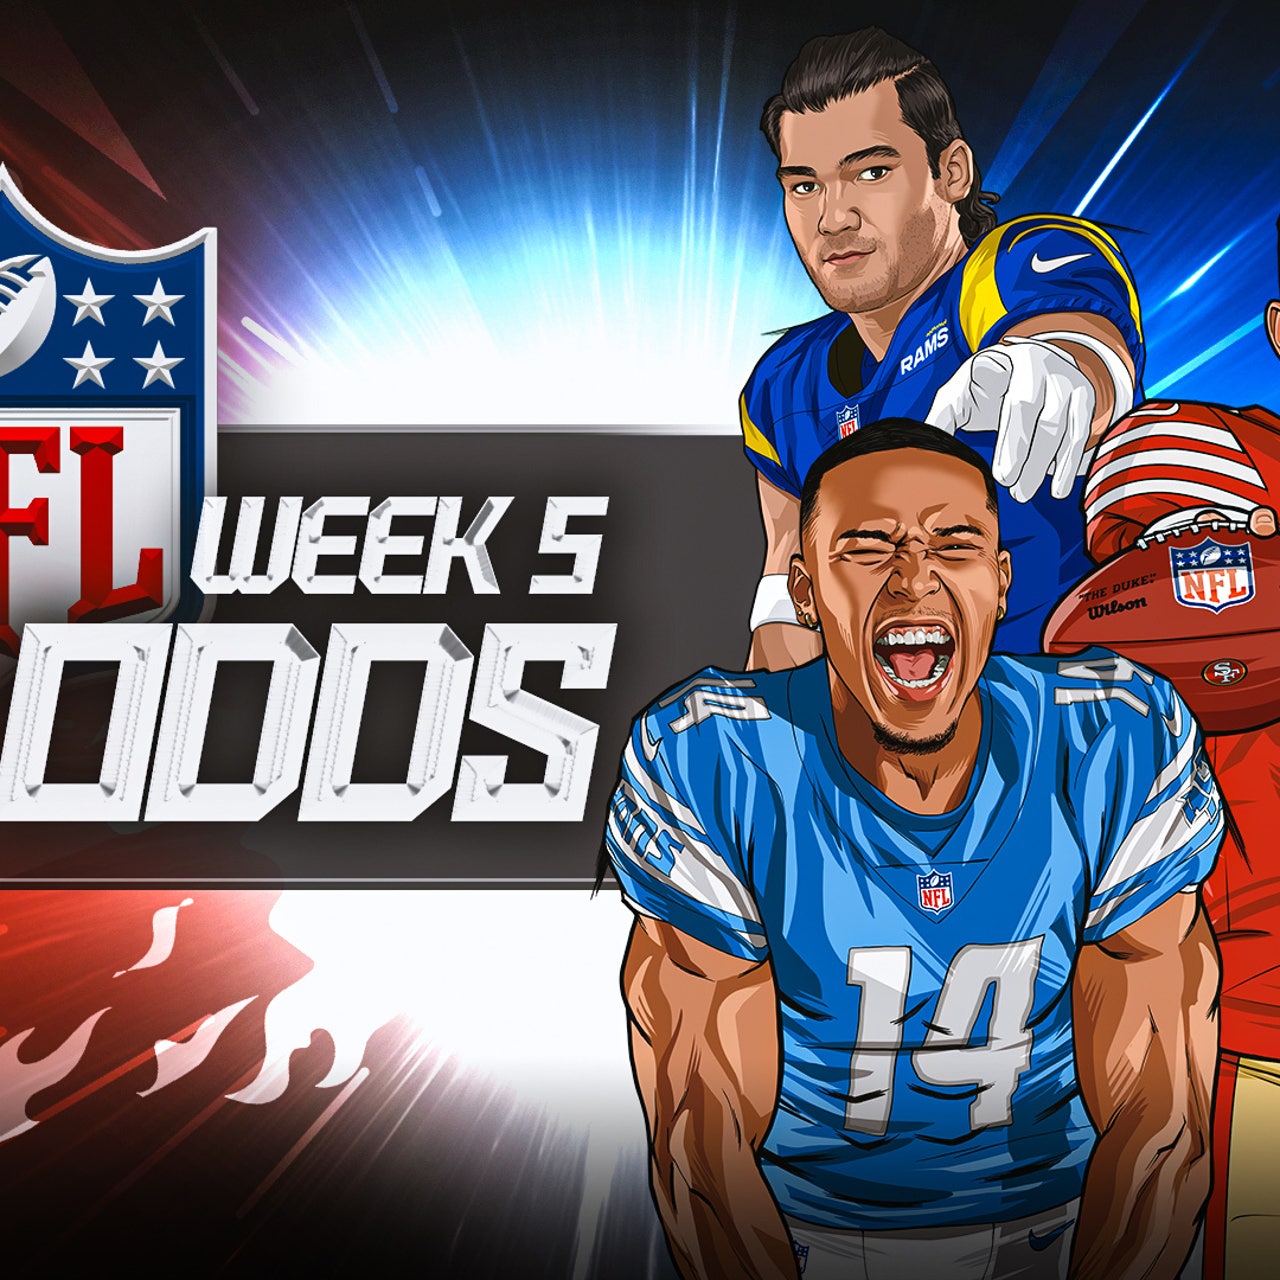 Indianapolis Colts vs. Denver Broncos betting odds NFL Week 5 game